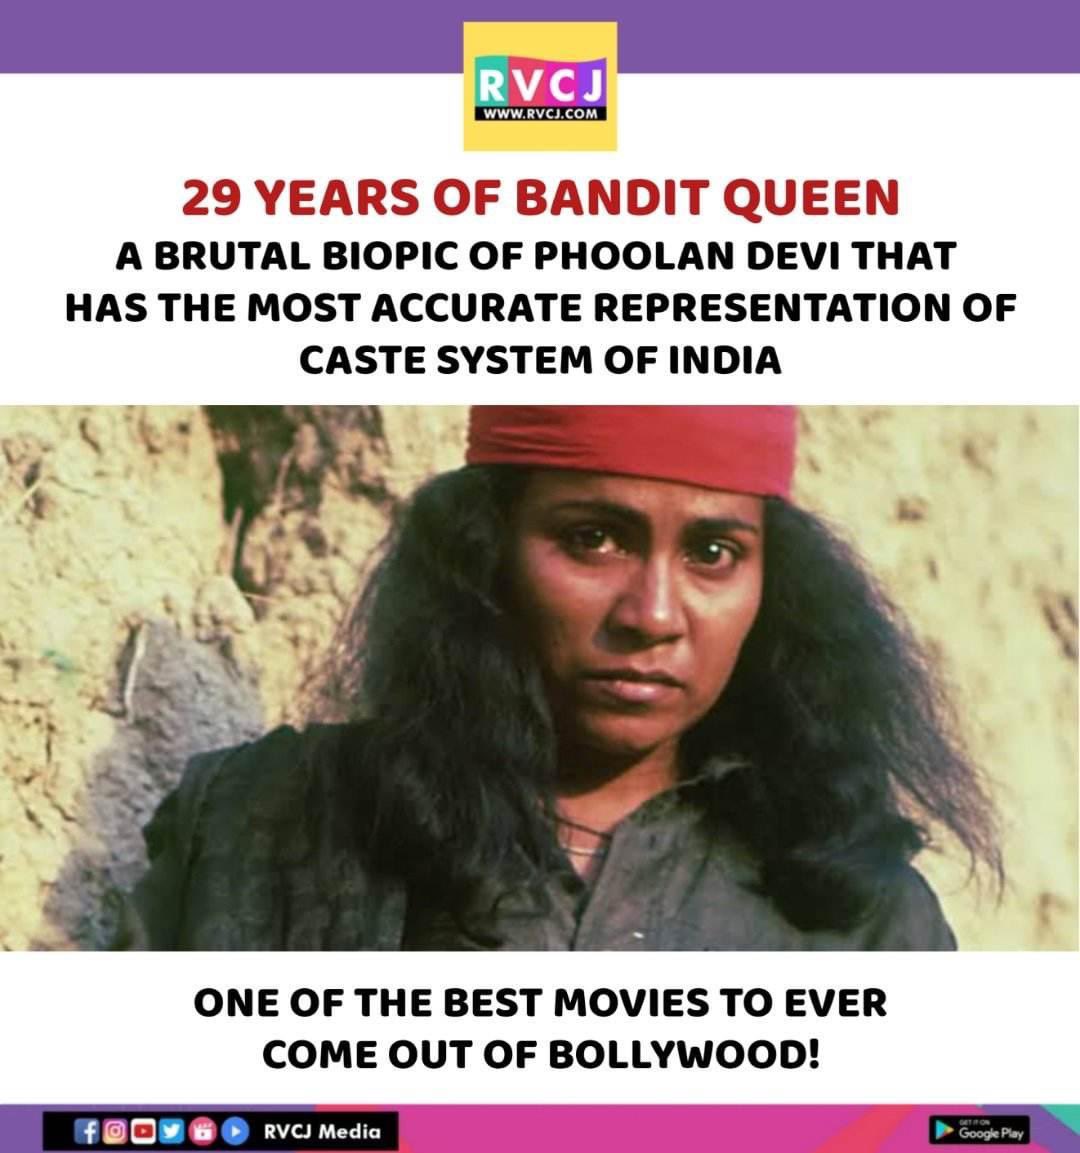 29 Years of Bandit Queen!
#banditqueen #phoolandevi #seemabiswas #shekharkapur #manojbajpayee #bollywood #rvcjmovies @shekharkapur